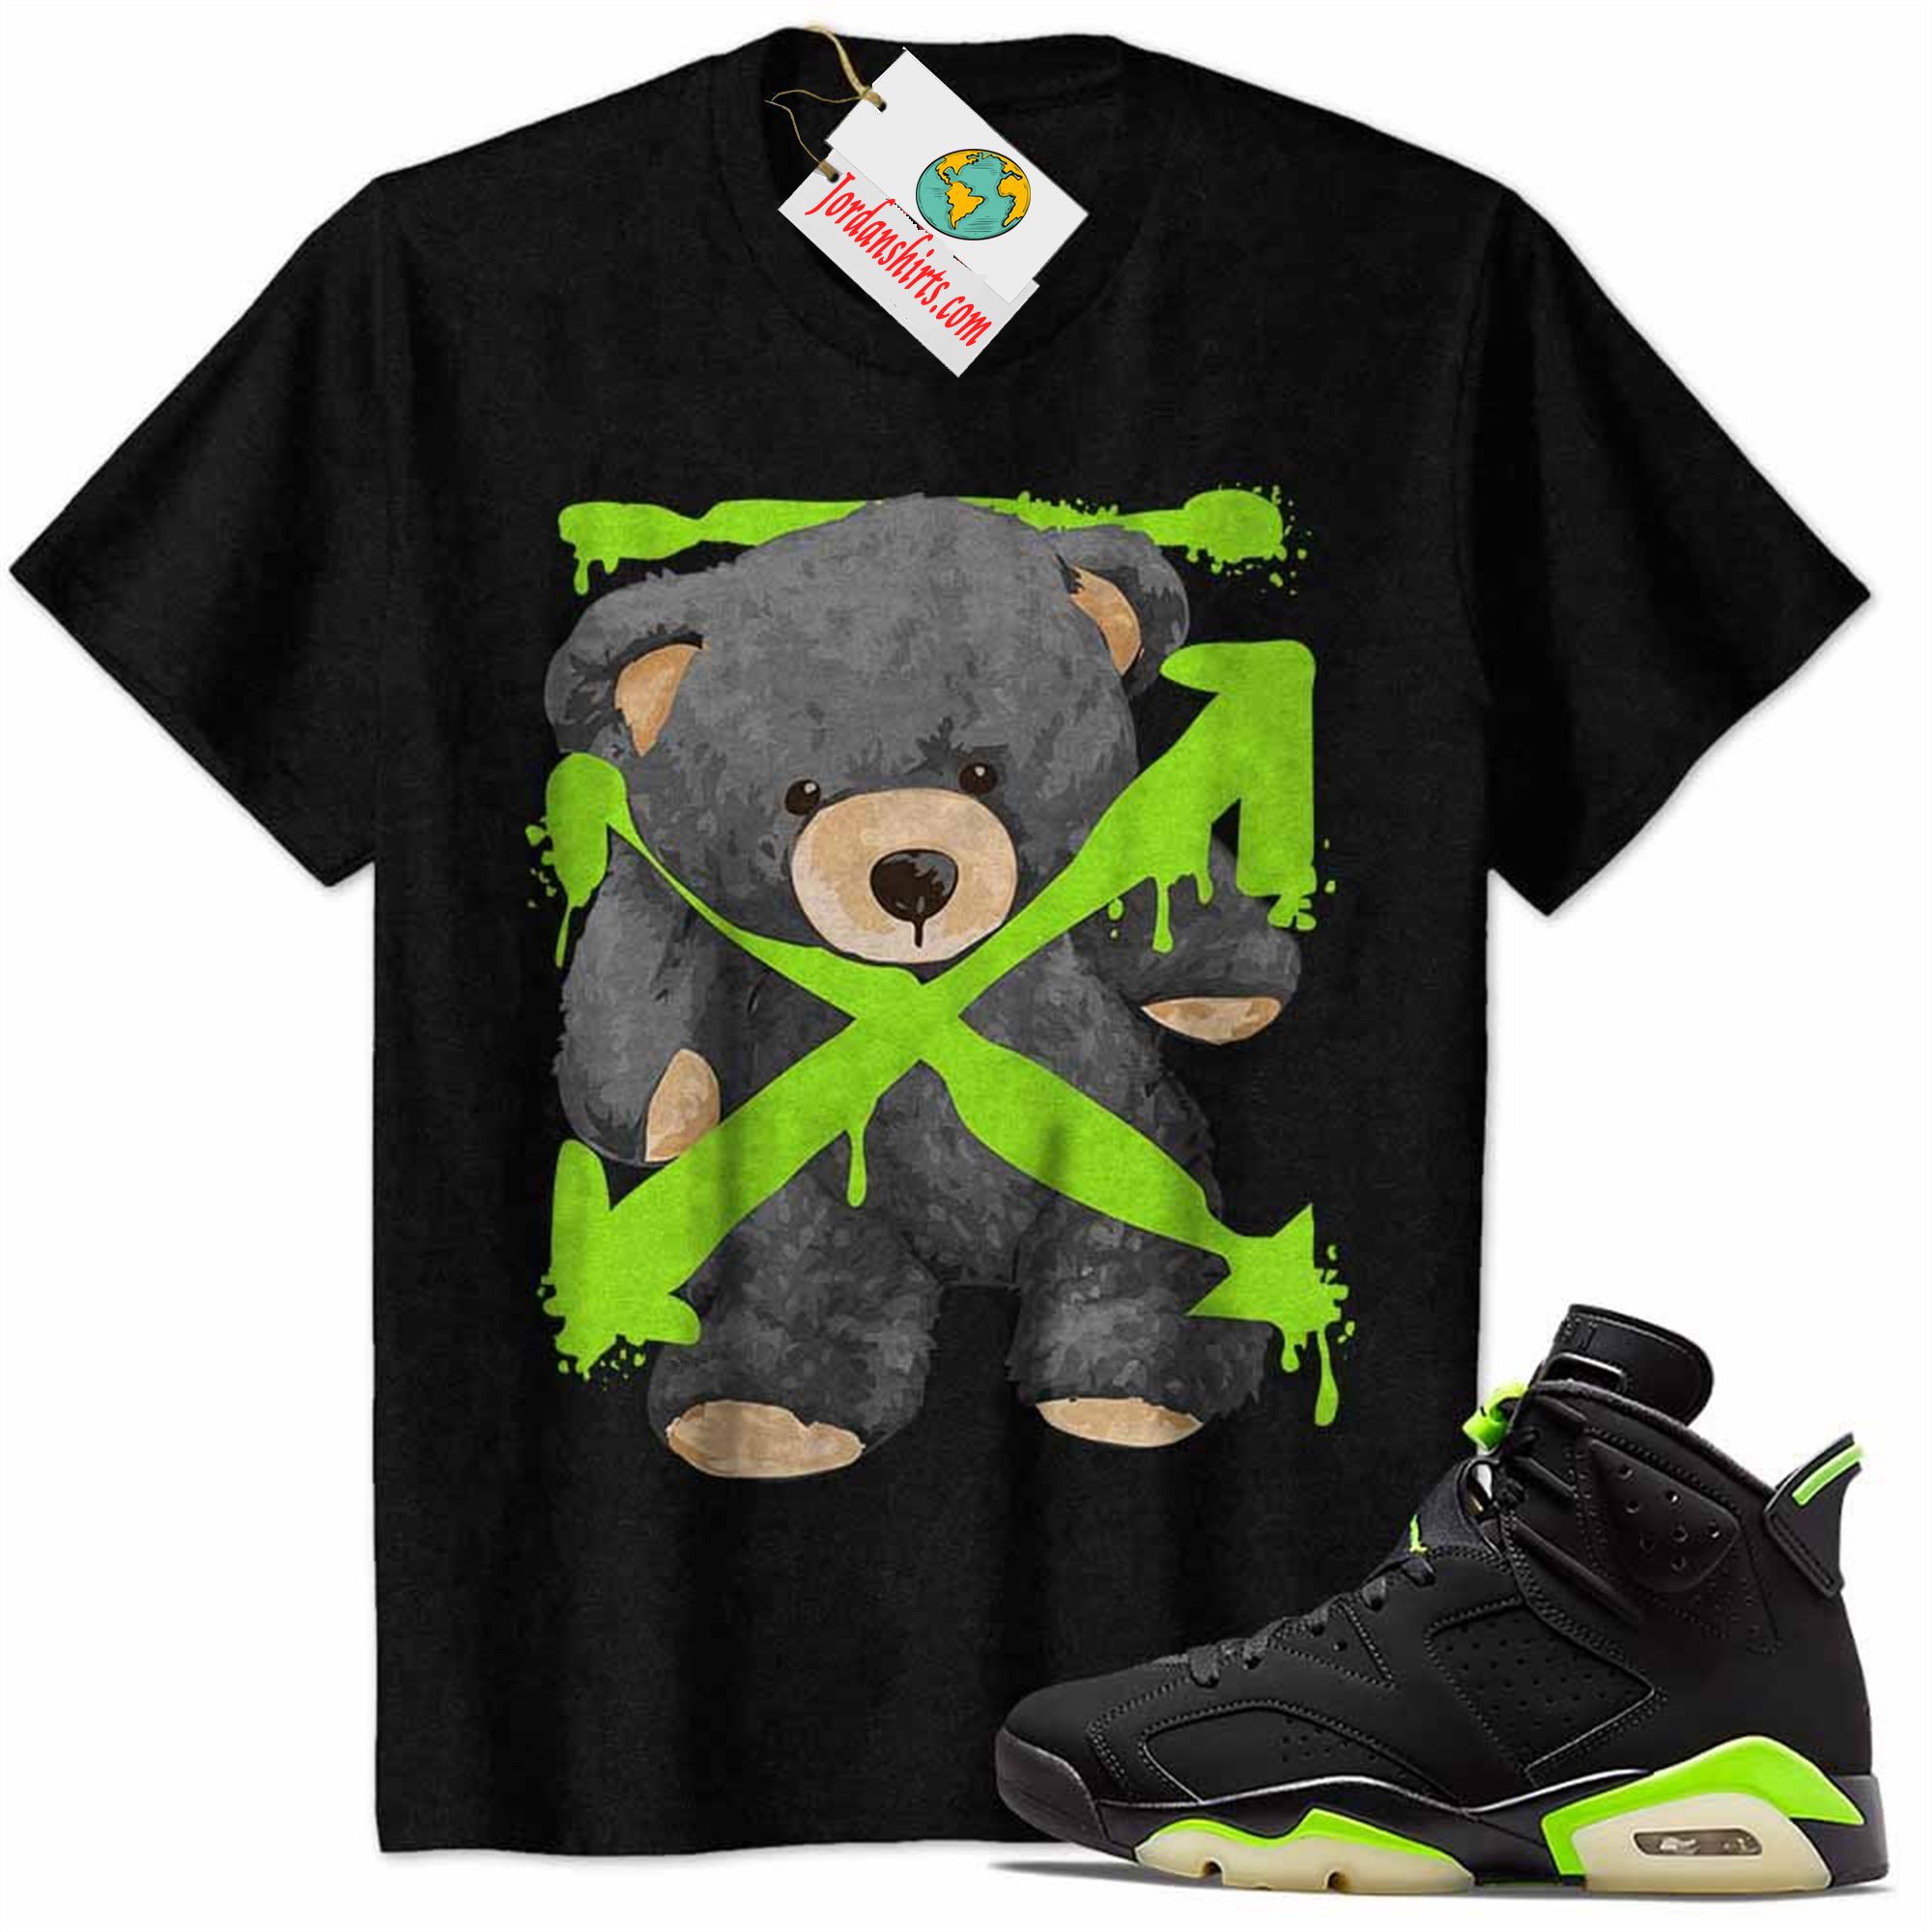 Jordan 6 Shirt, Teddy Bear Off White Paint Dripping Black Air Jordan 6 Electric Green 6s Full Size Up To 5xl